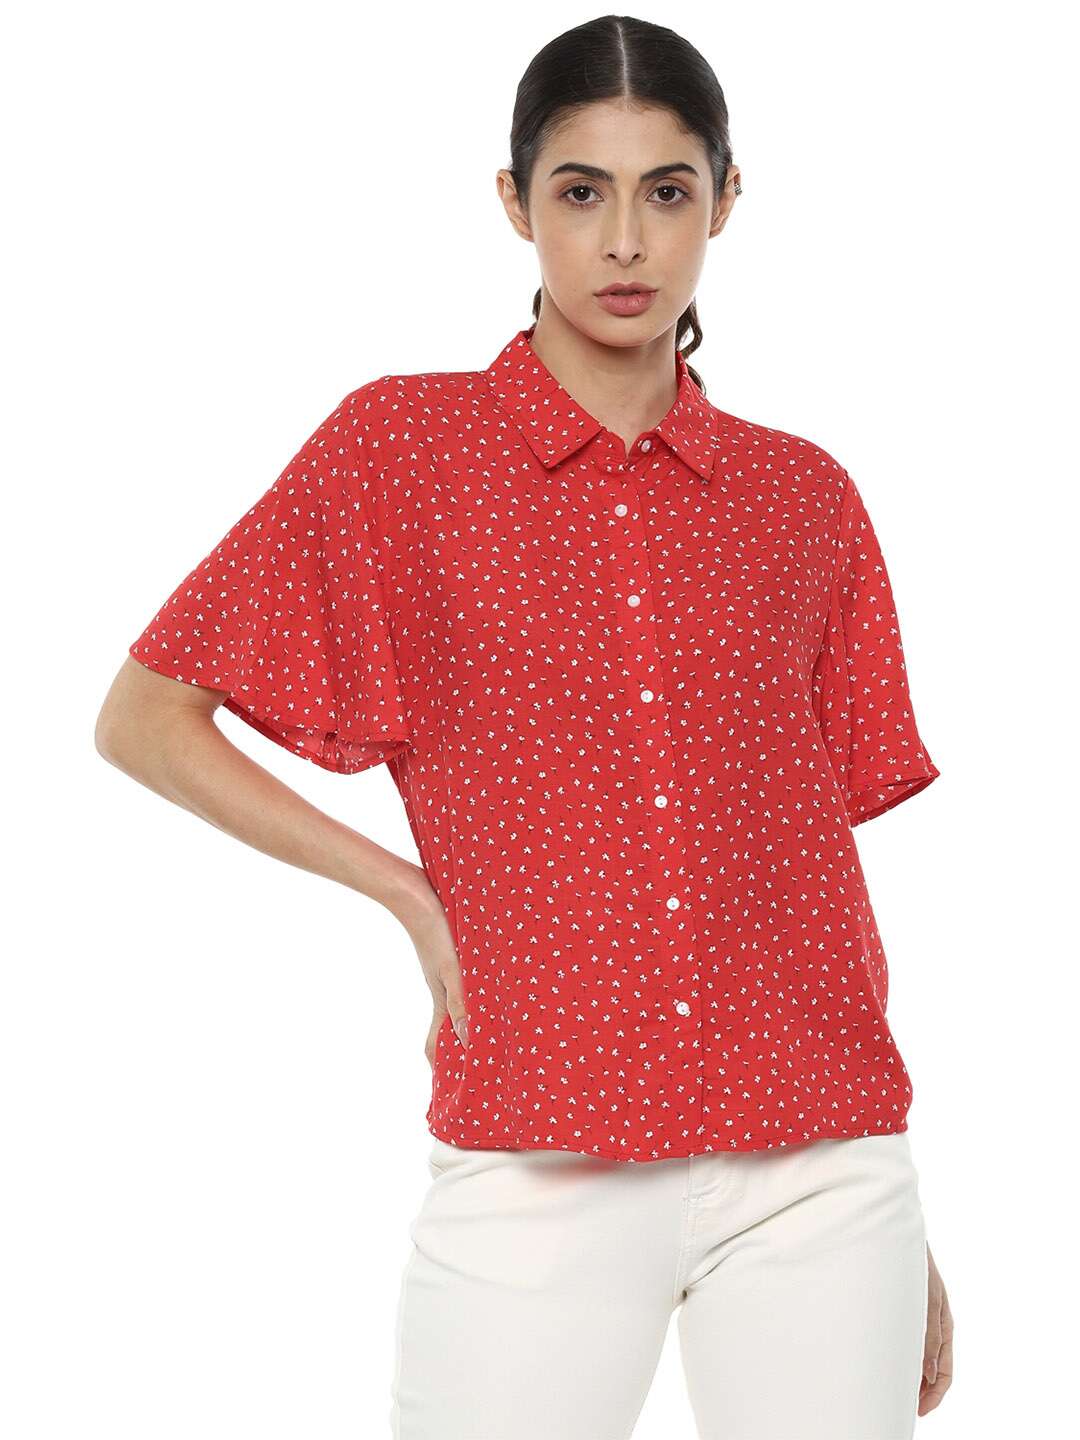 Van Heusen Red Printed Shirt